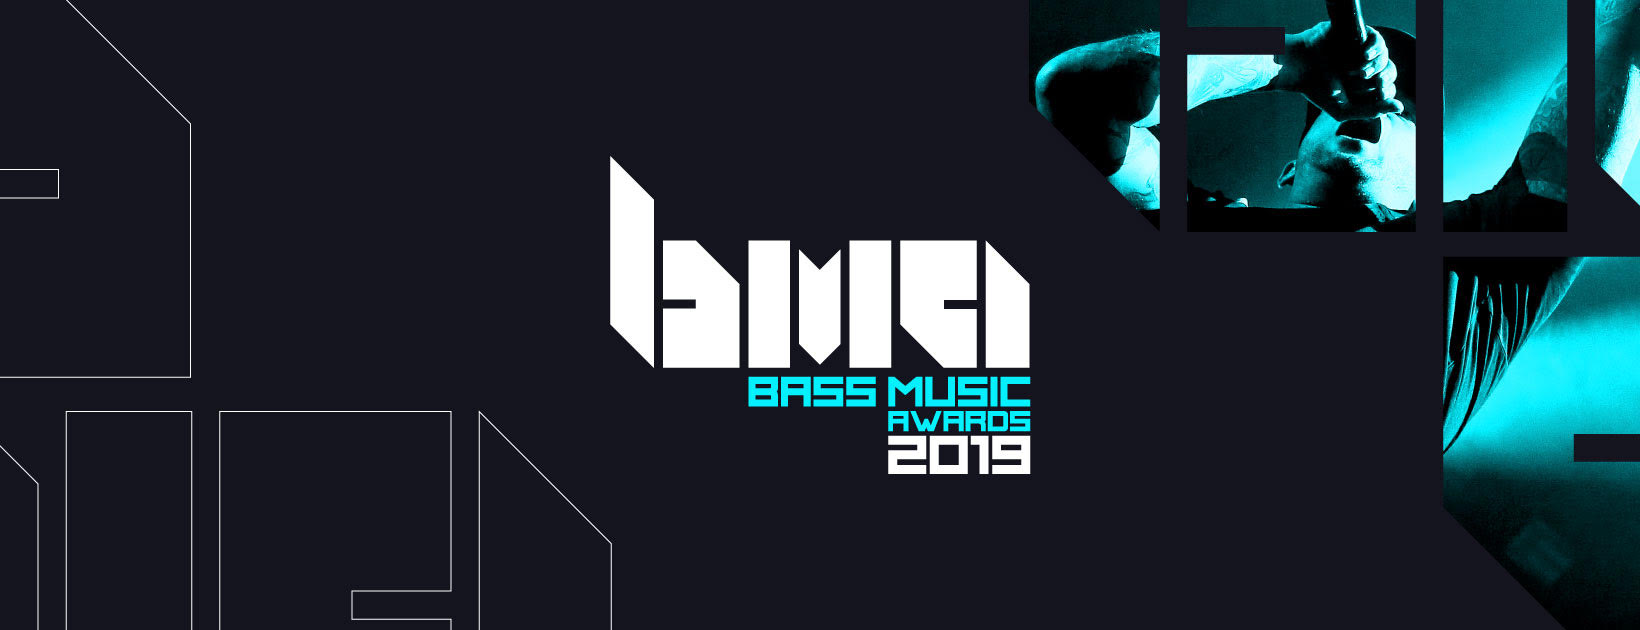 bass music awards 2019